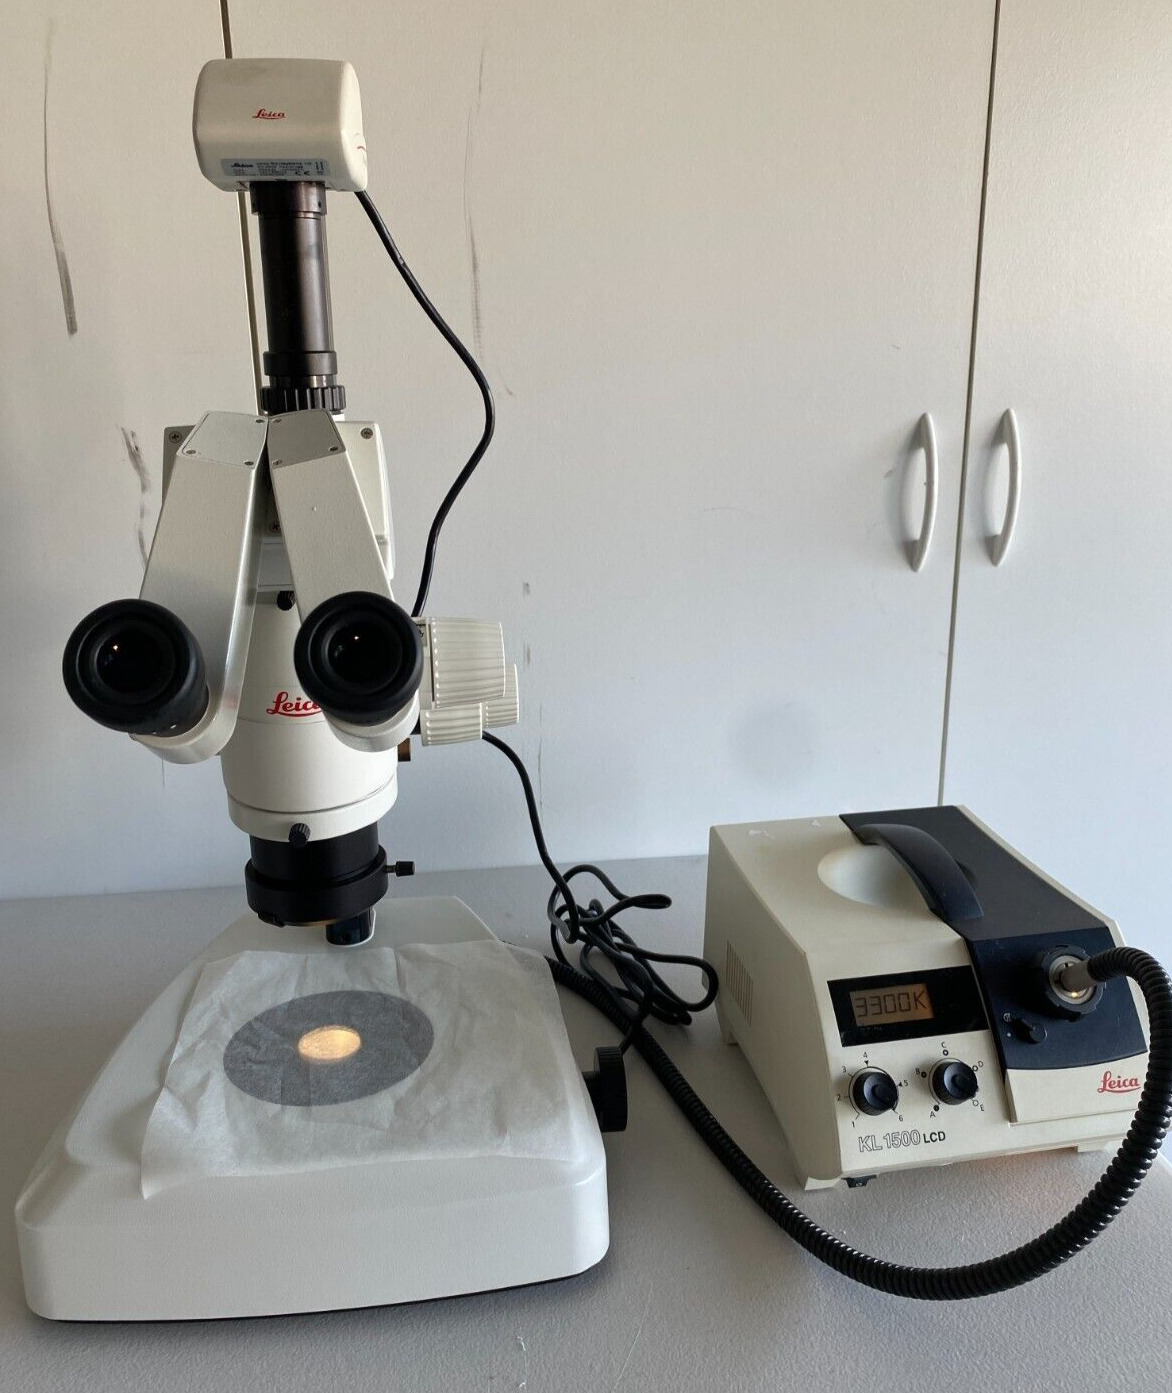 Leica  MZ12.5   Zoom Stereo Microscope